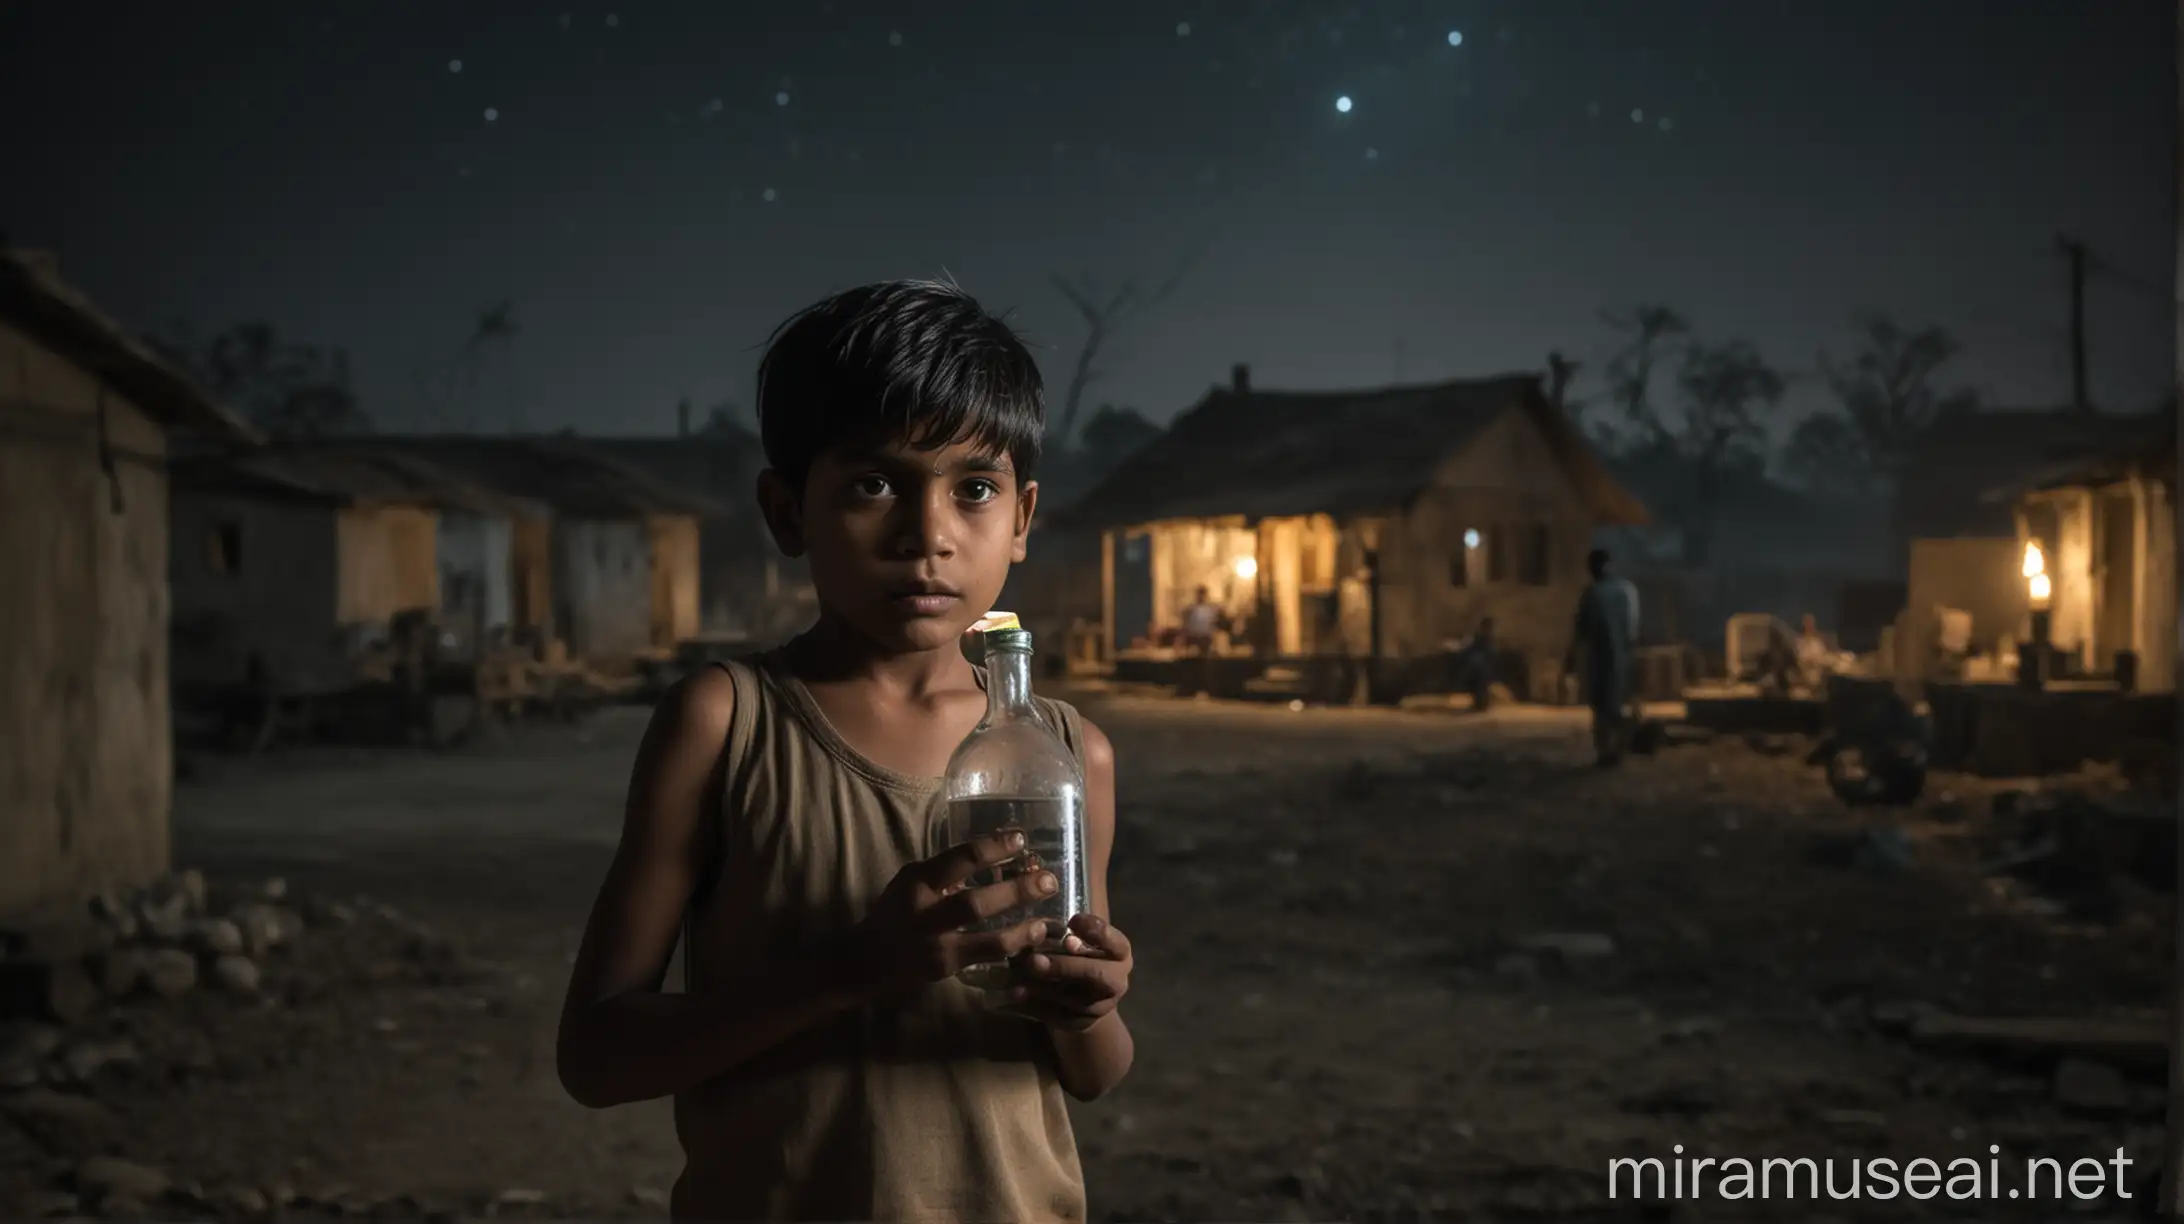 clear focus on 6 years old Indian boy hand, acid bottle in hand, dark scene, backlight, village home in background, night scene